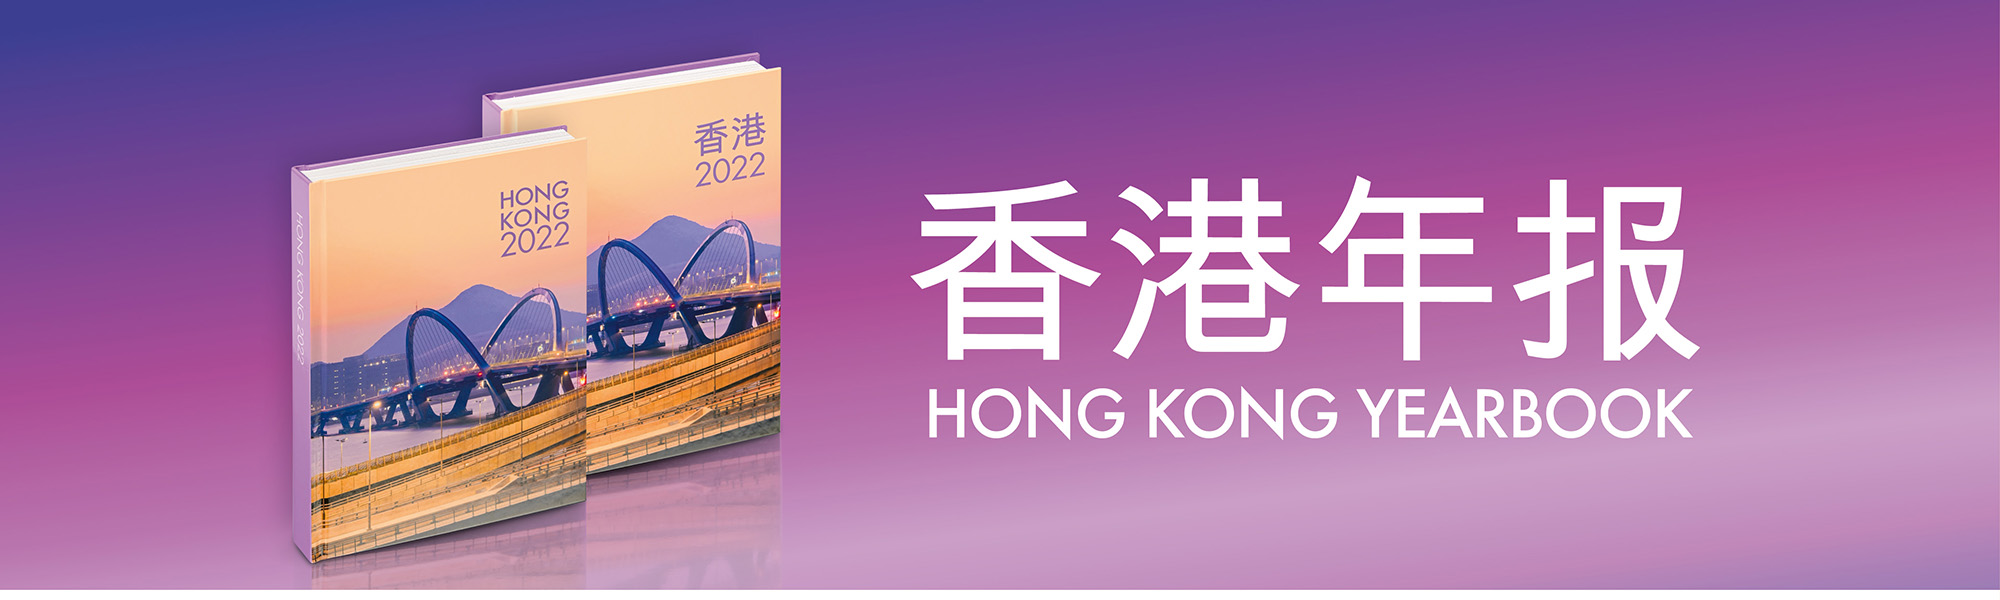 香港年报 Hong Kong Yearbook